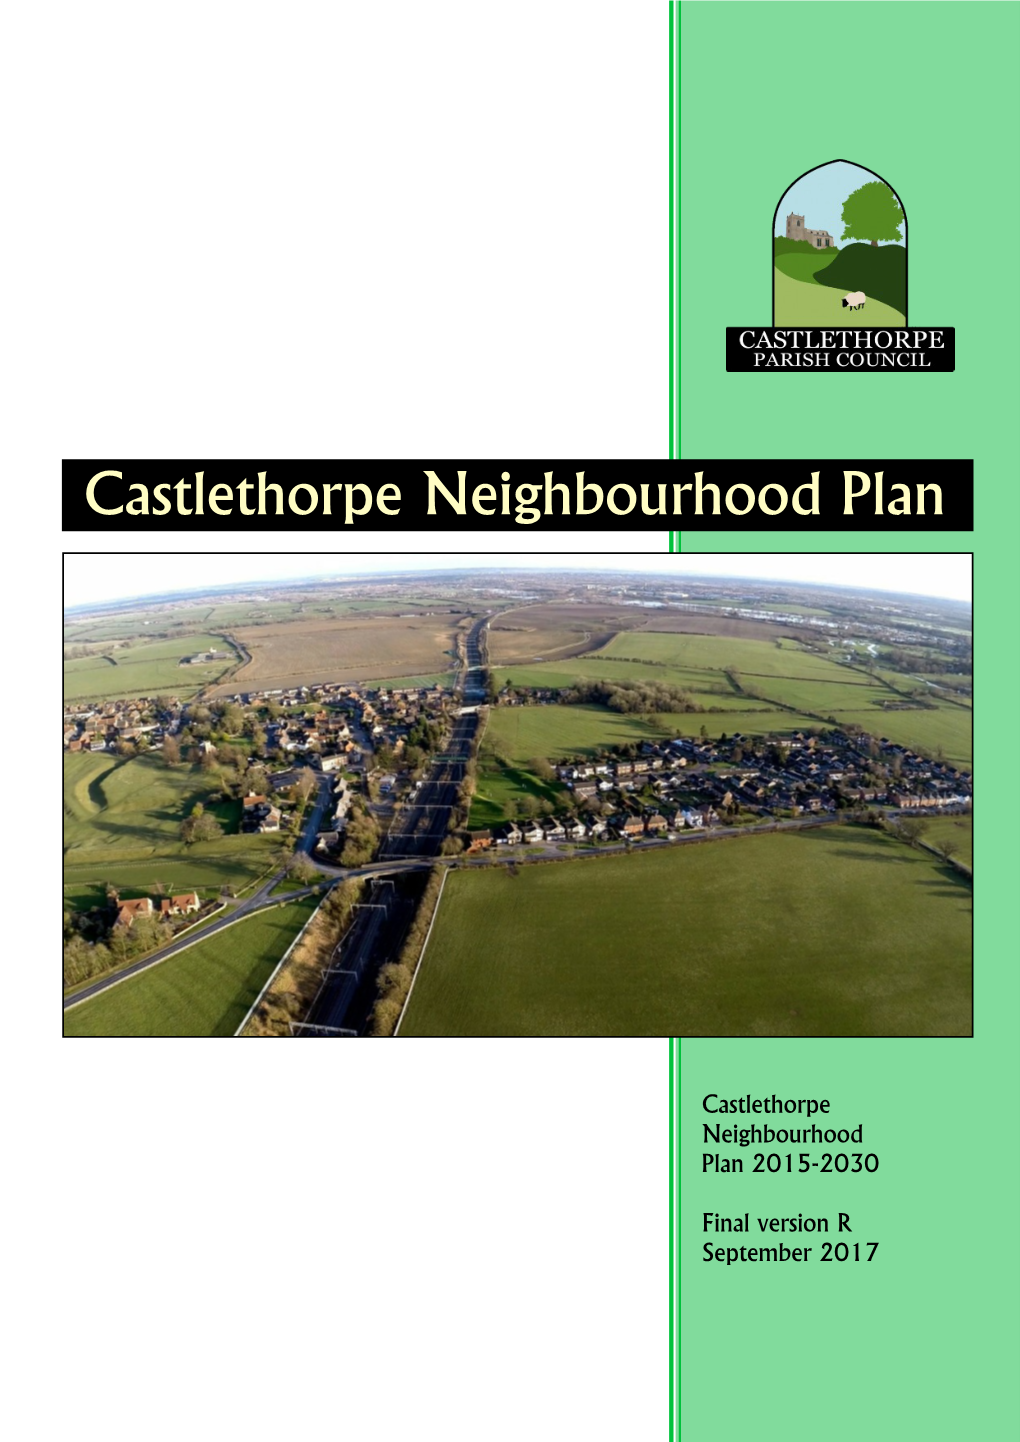 Castlethorpe Neighbourhood Plan 2015-2030